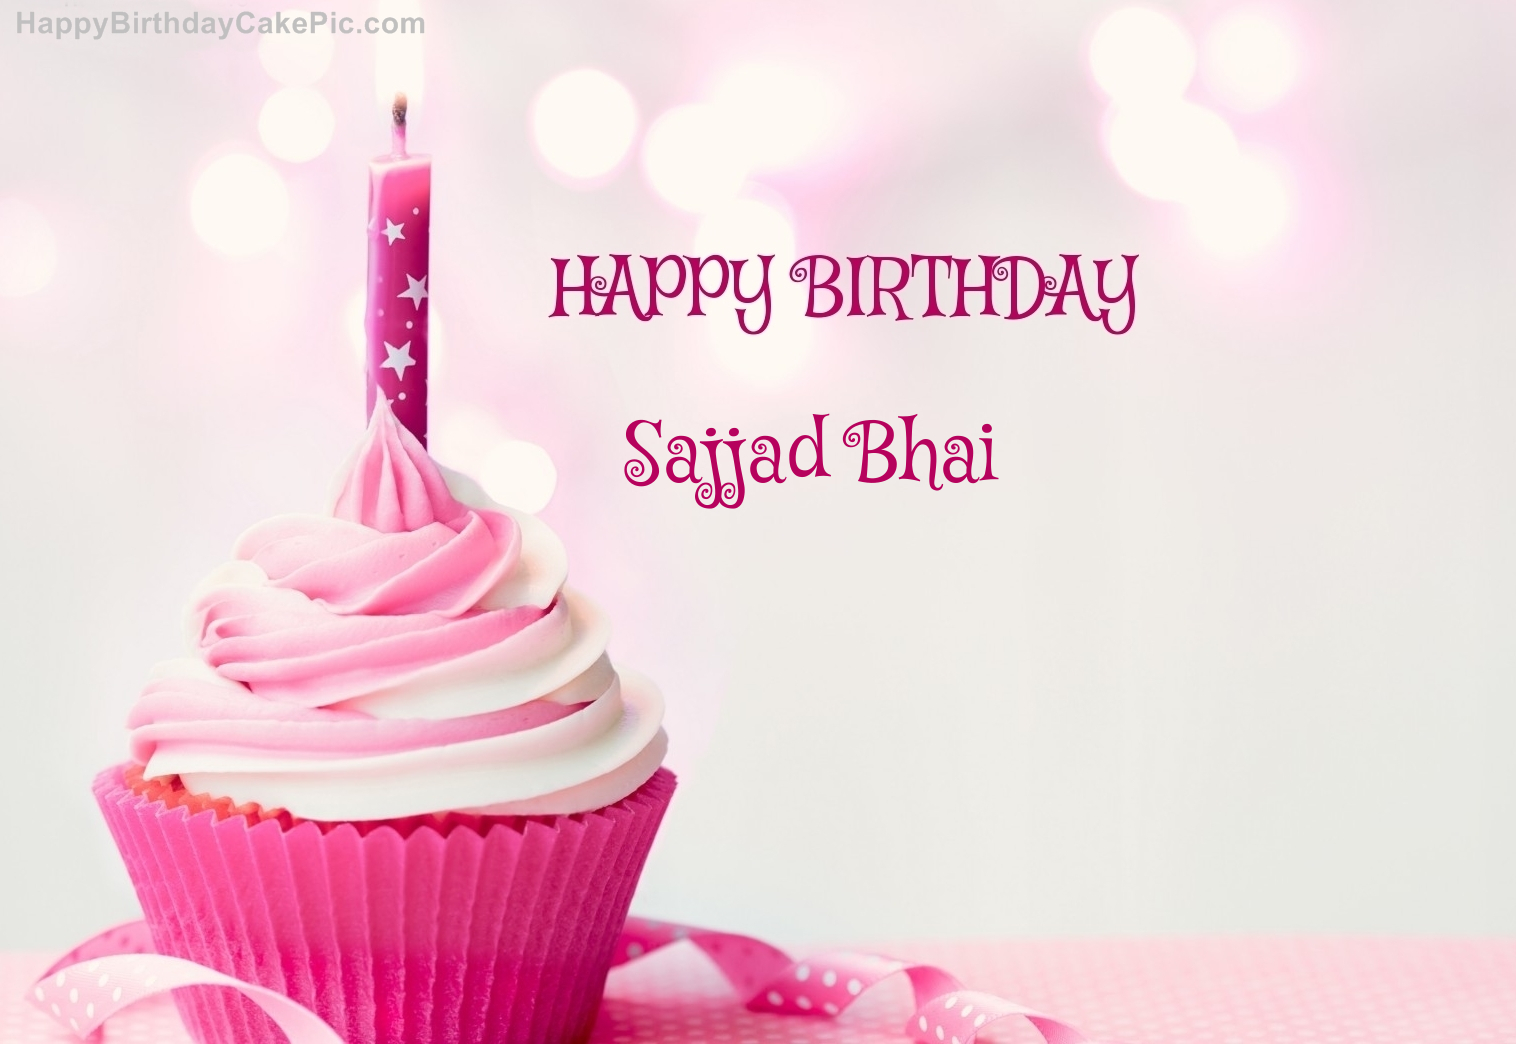 ️ Happy Birthday Cupcake Candle Pink Cake For Sajjad Bhai